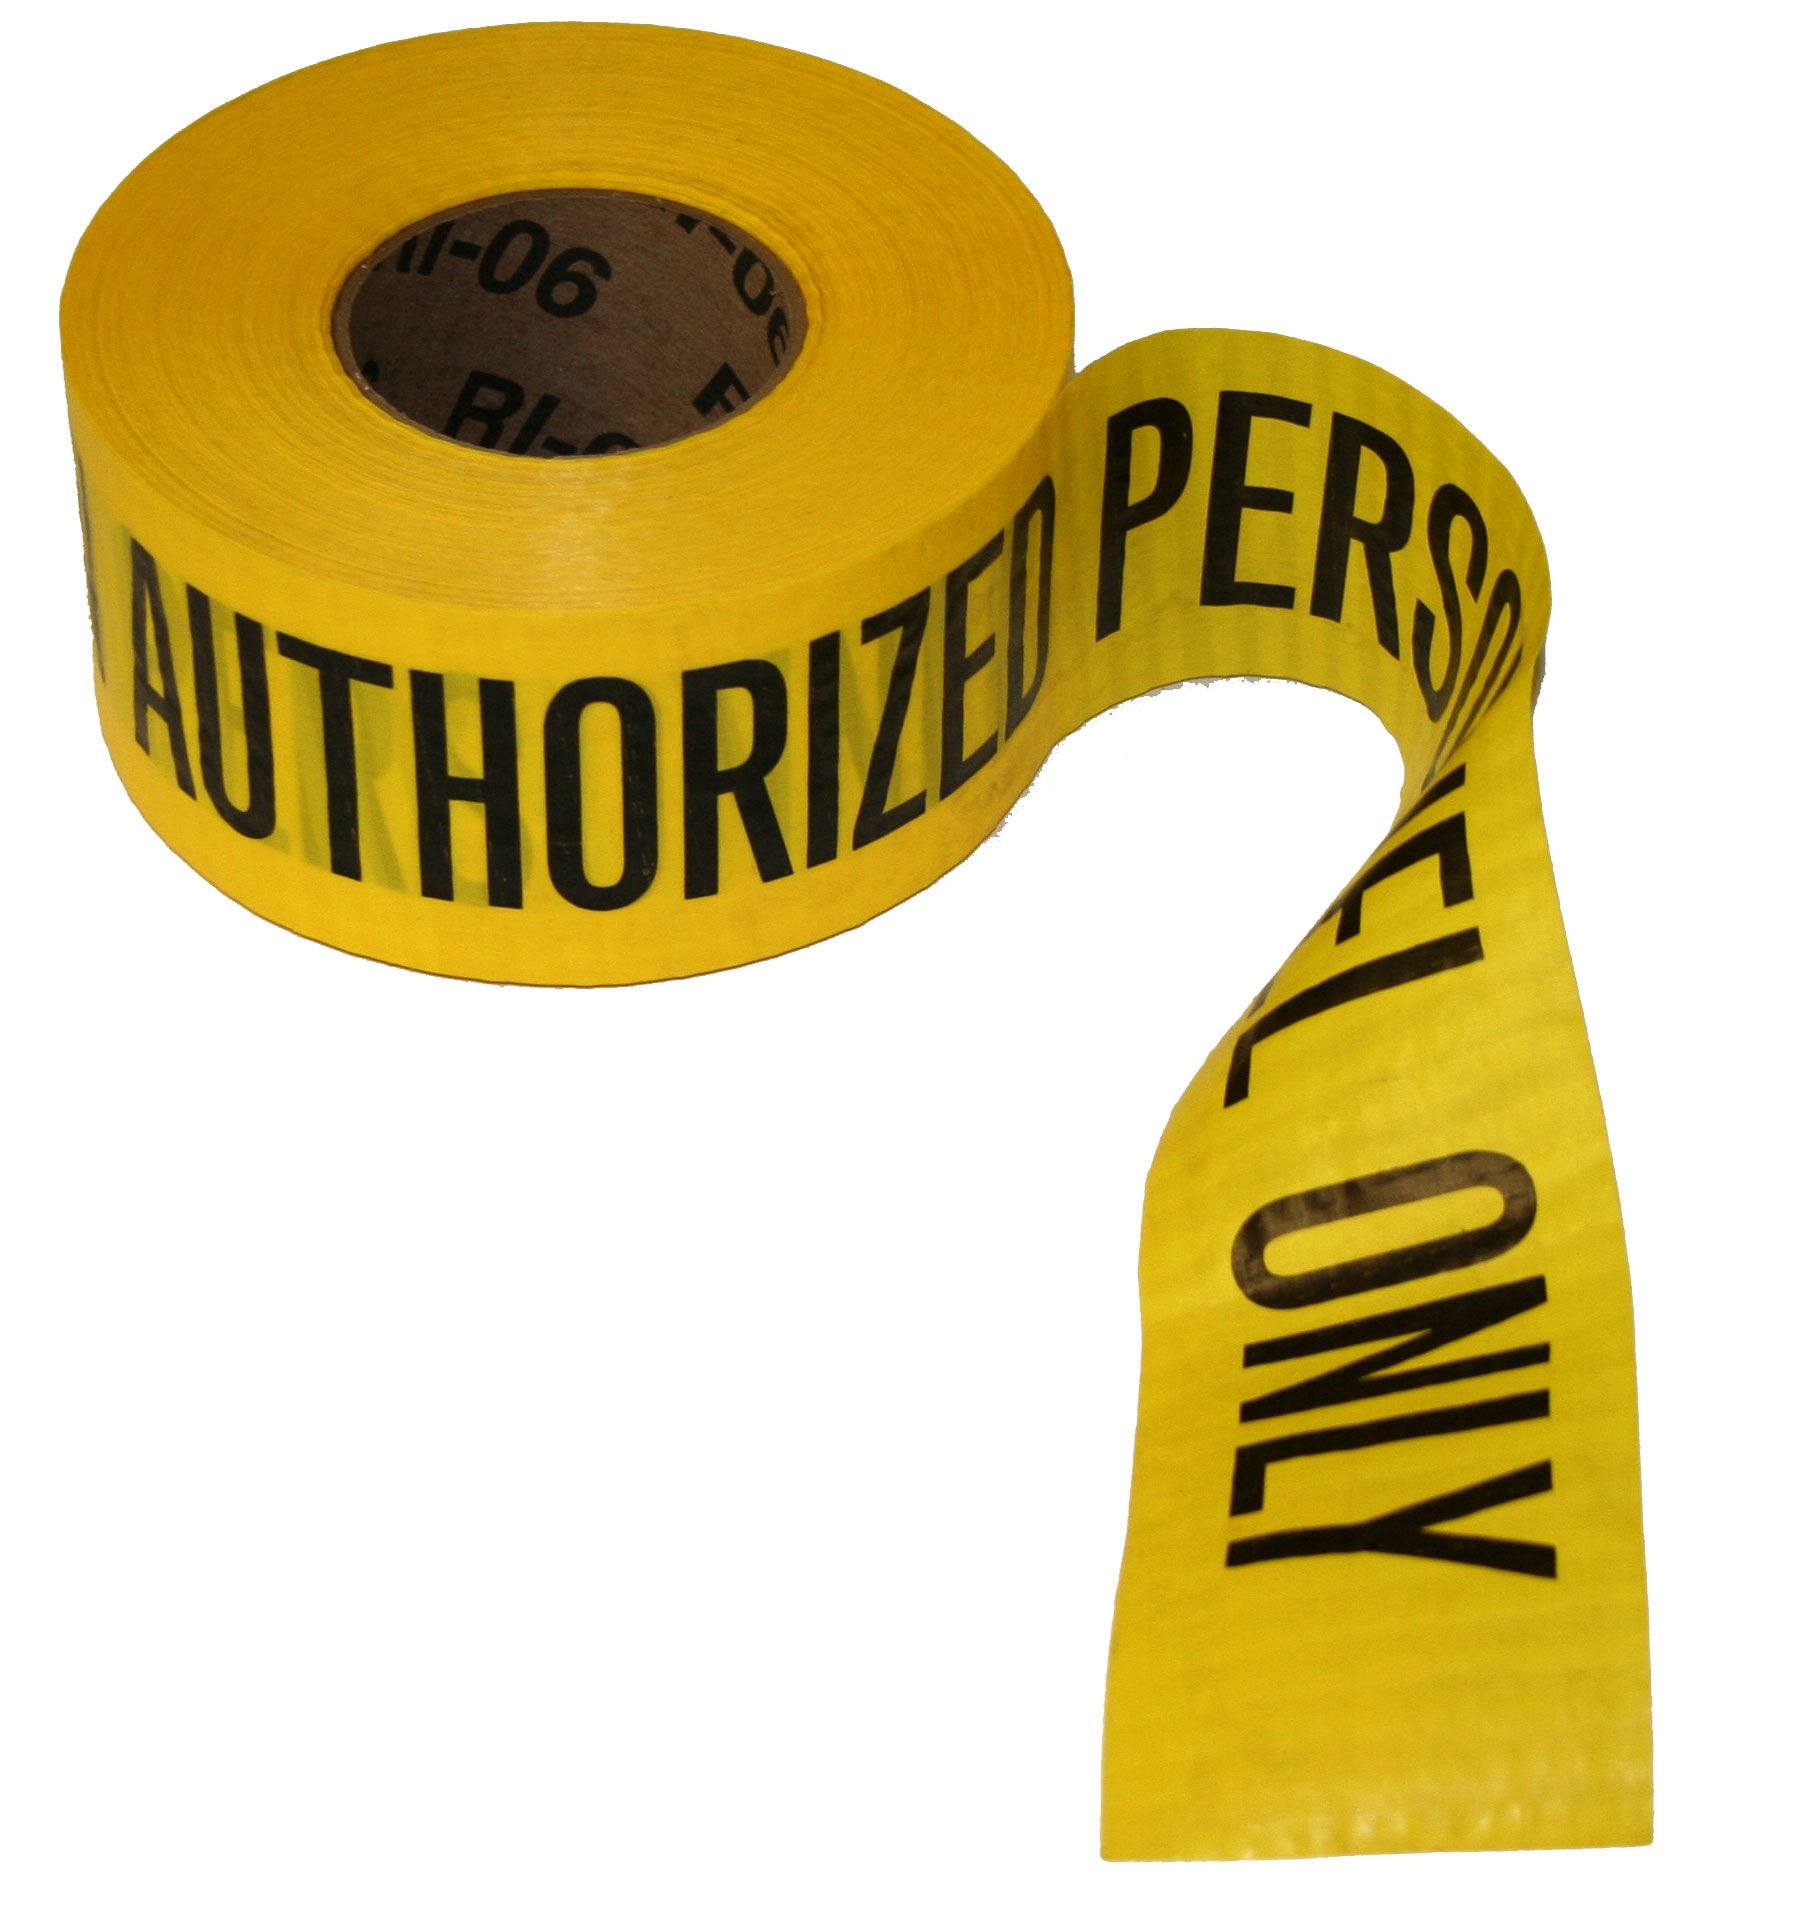 3X500CAU7MIL "Caution Authorized Personnel Only" Tape